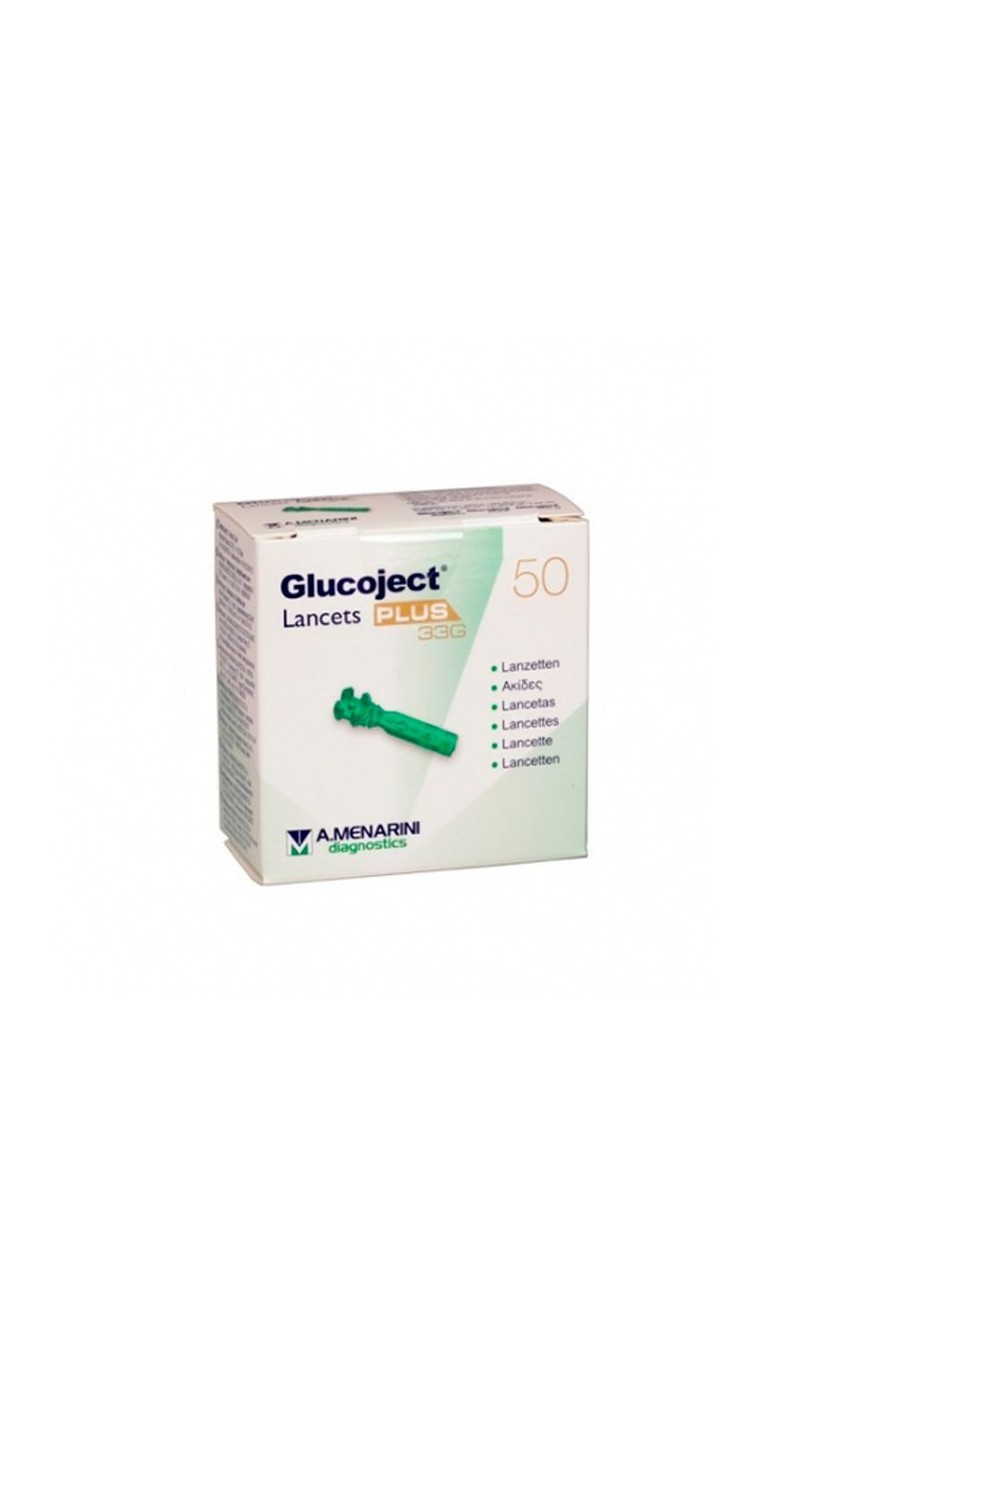 Menarini Glucoject 50 Lancets Plus 33g